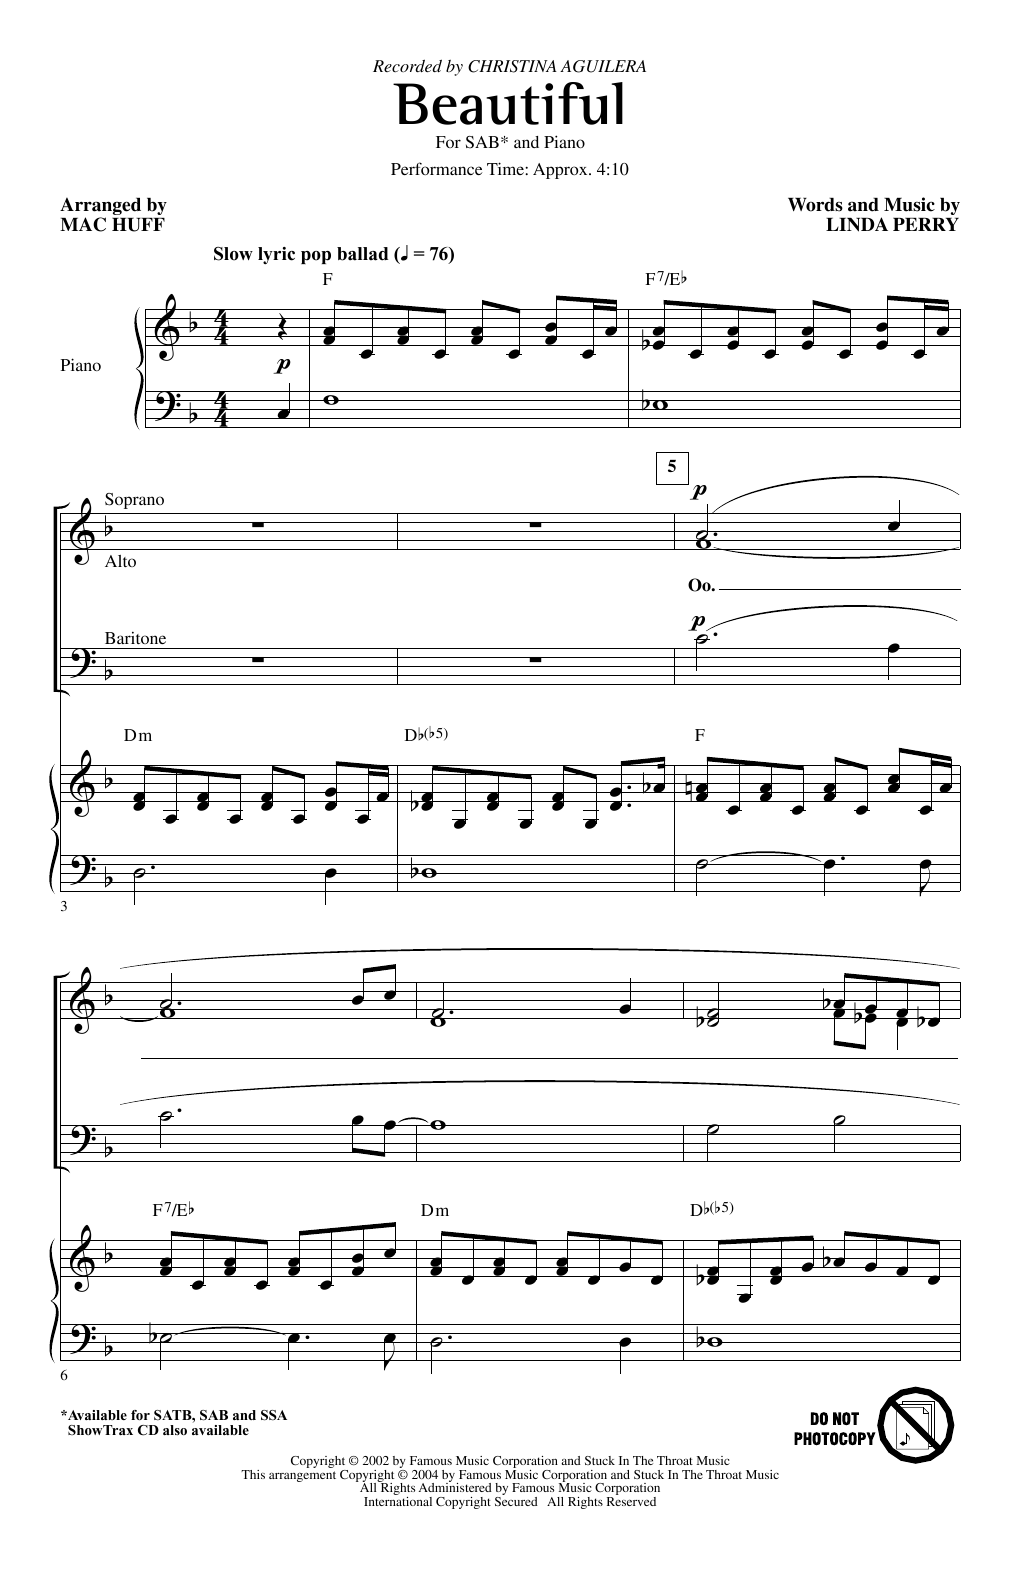 Christina Aguilera Beautiful (arr. Mac Huff) Sheet Music Notes & Chords for SATB Choir - Download or Print PDF